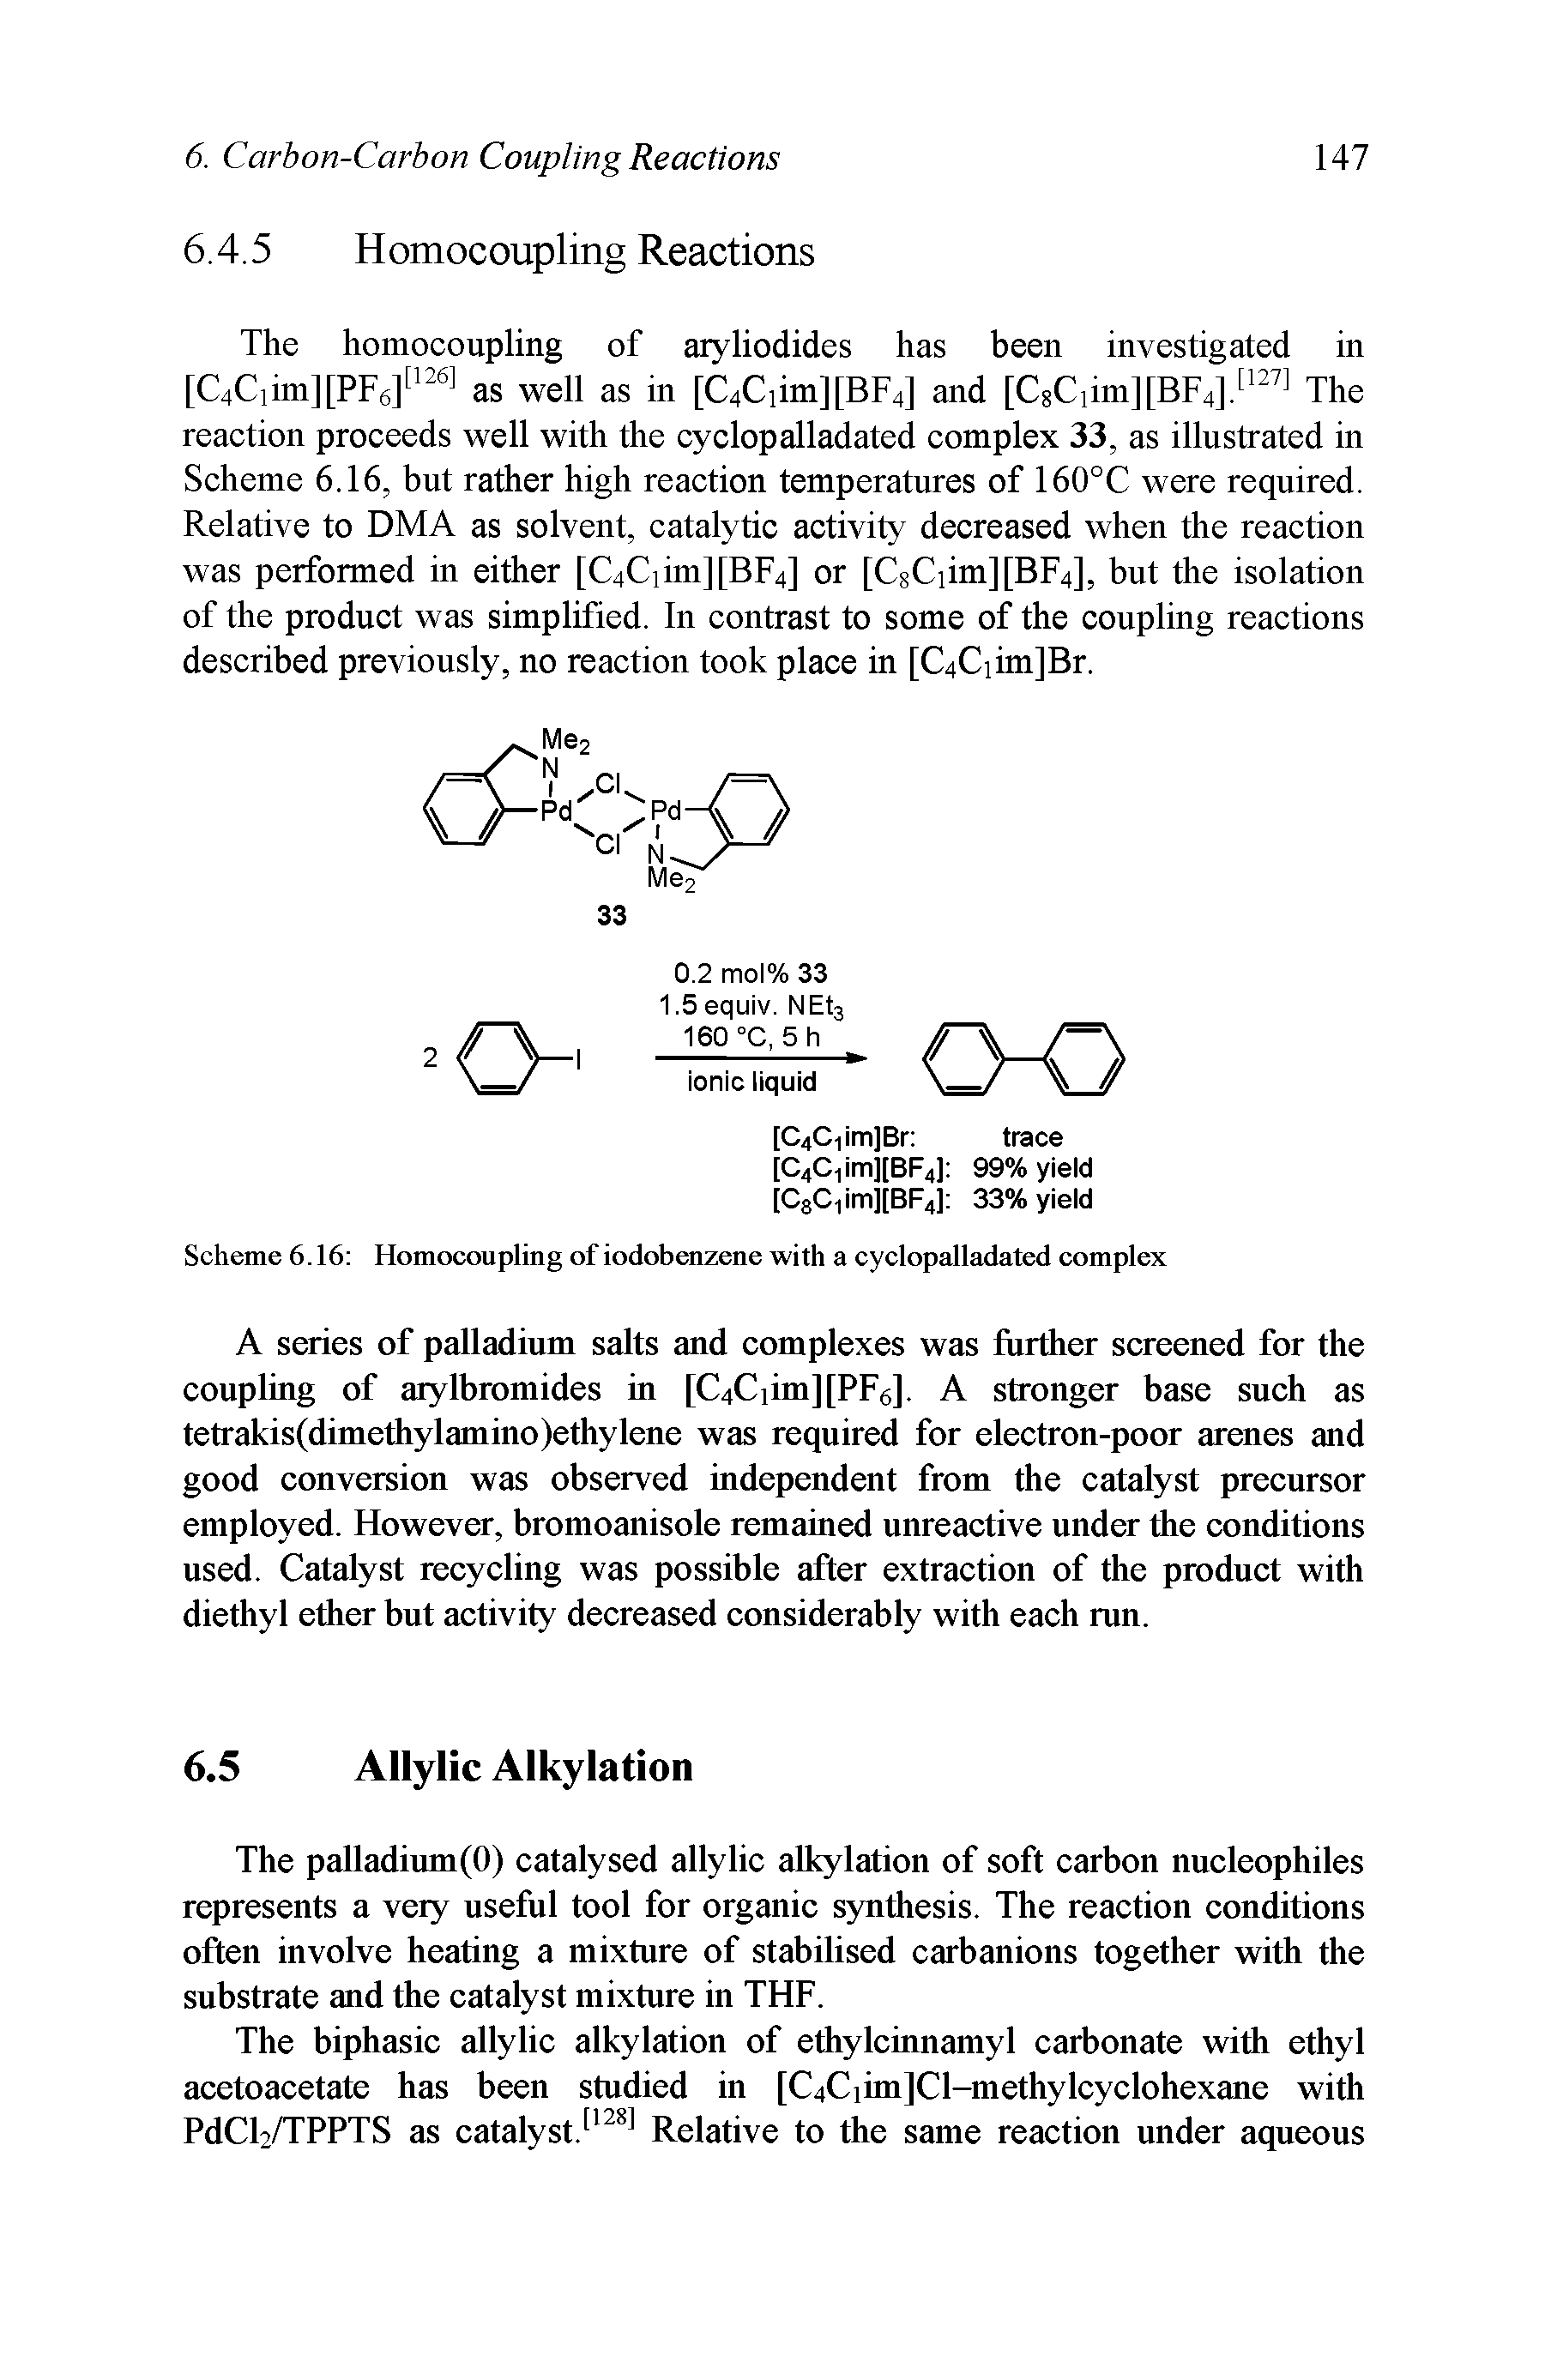 Scheme 6.16 Homocoupling of iodobenzene with a cyclopalladated complex...